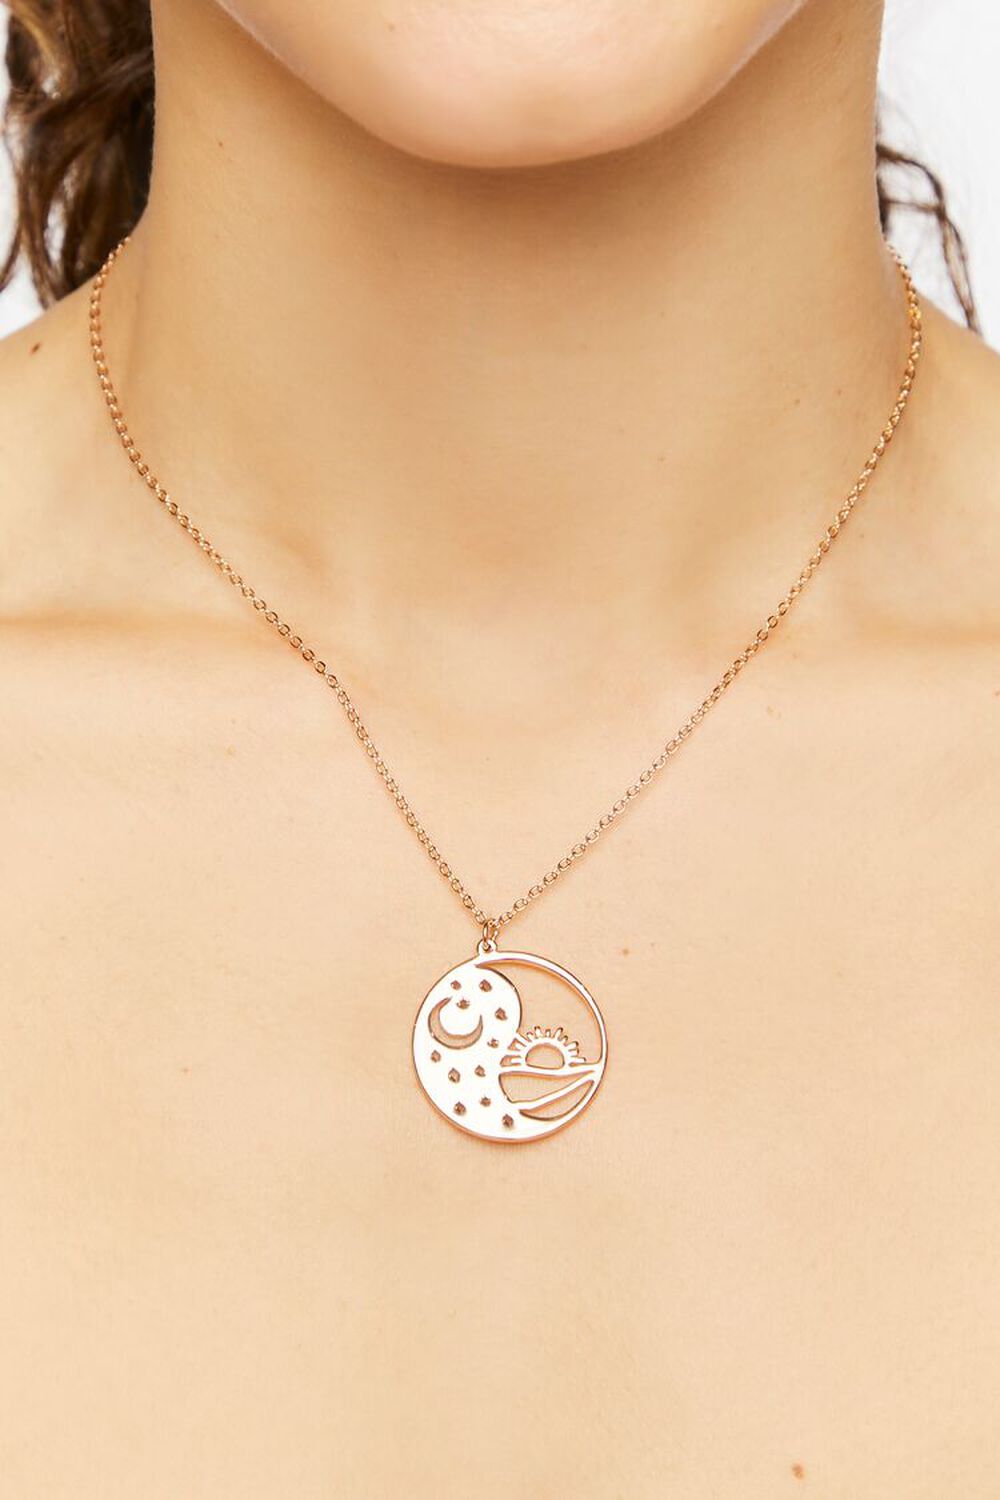 GOLD Moon & Sun Pendant Necklace, image 1